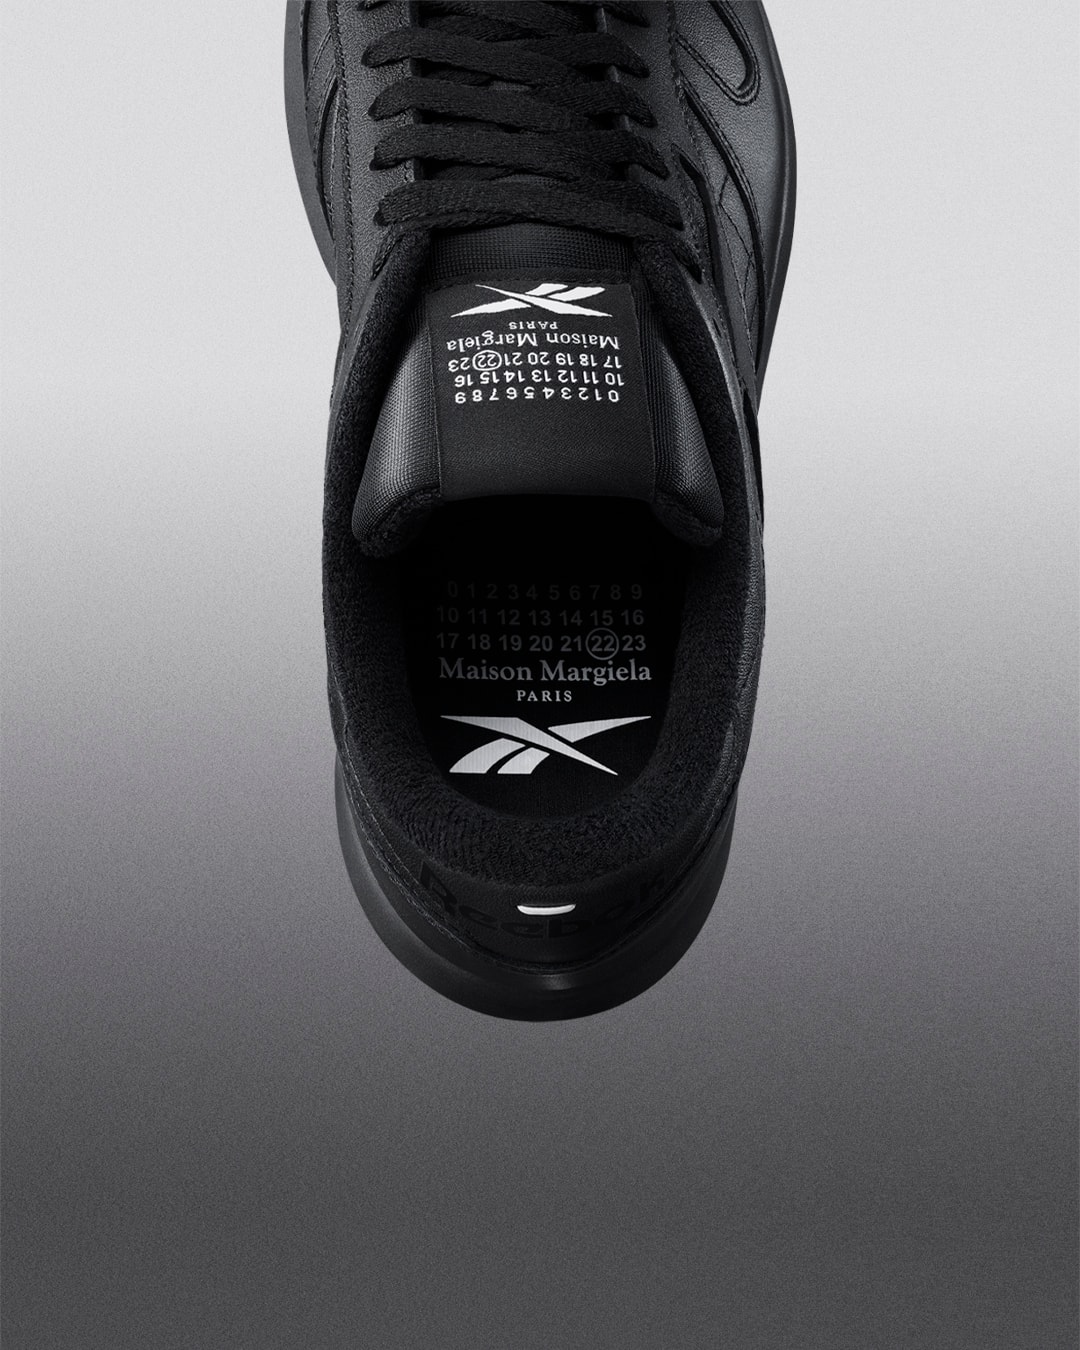 maison margiela reebok classic leather tabi toe sneakers collaboration black details insoles logo tongue